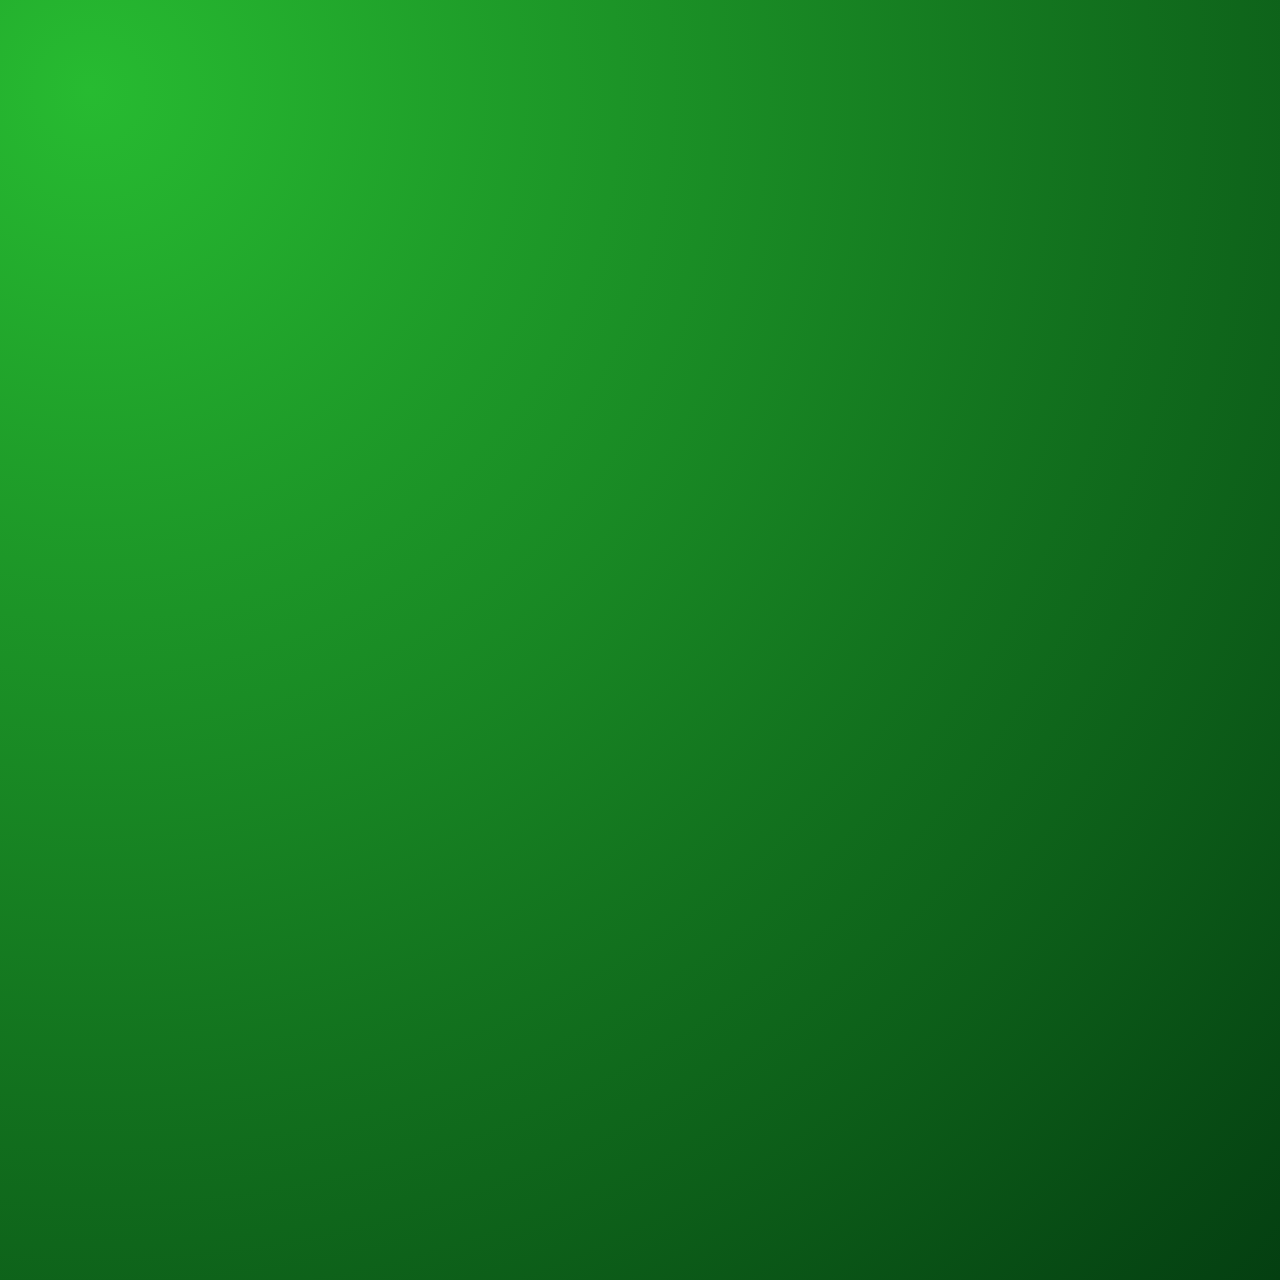 Background Green